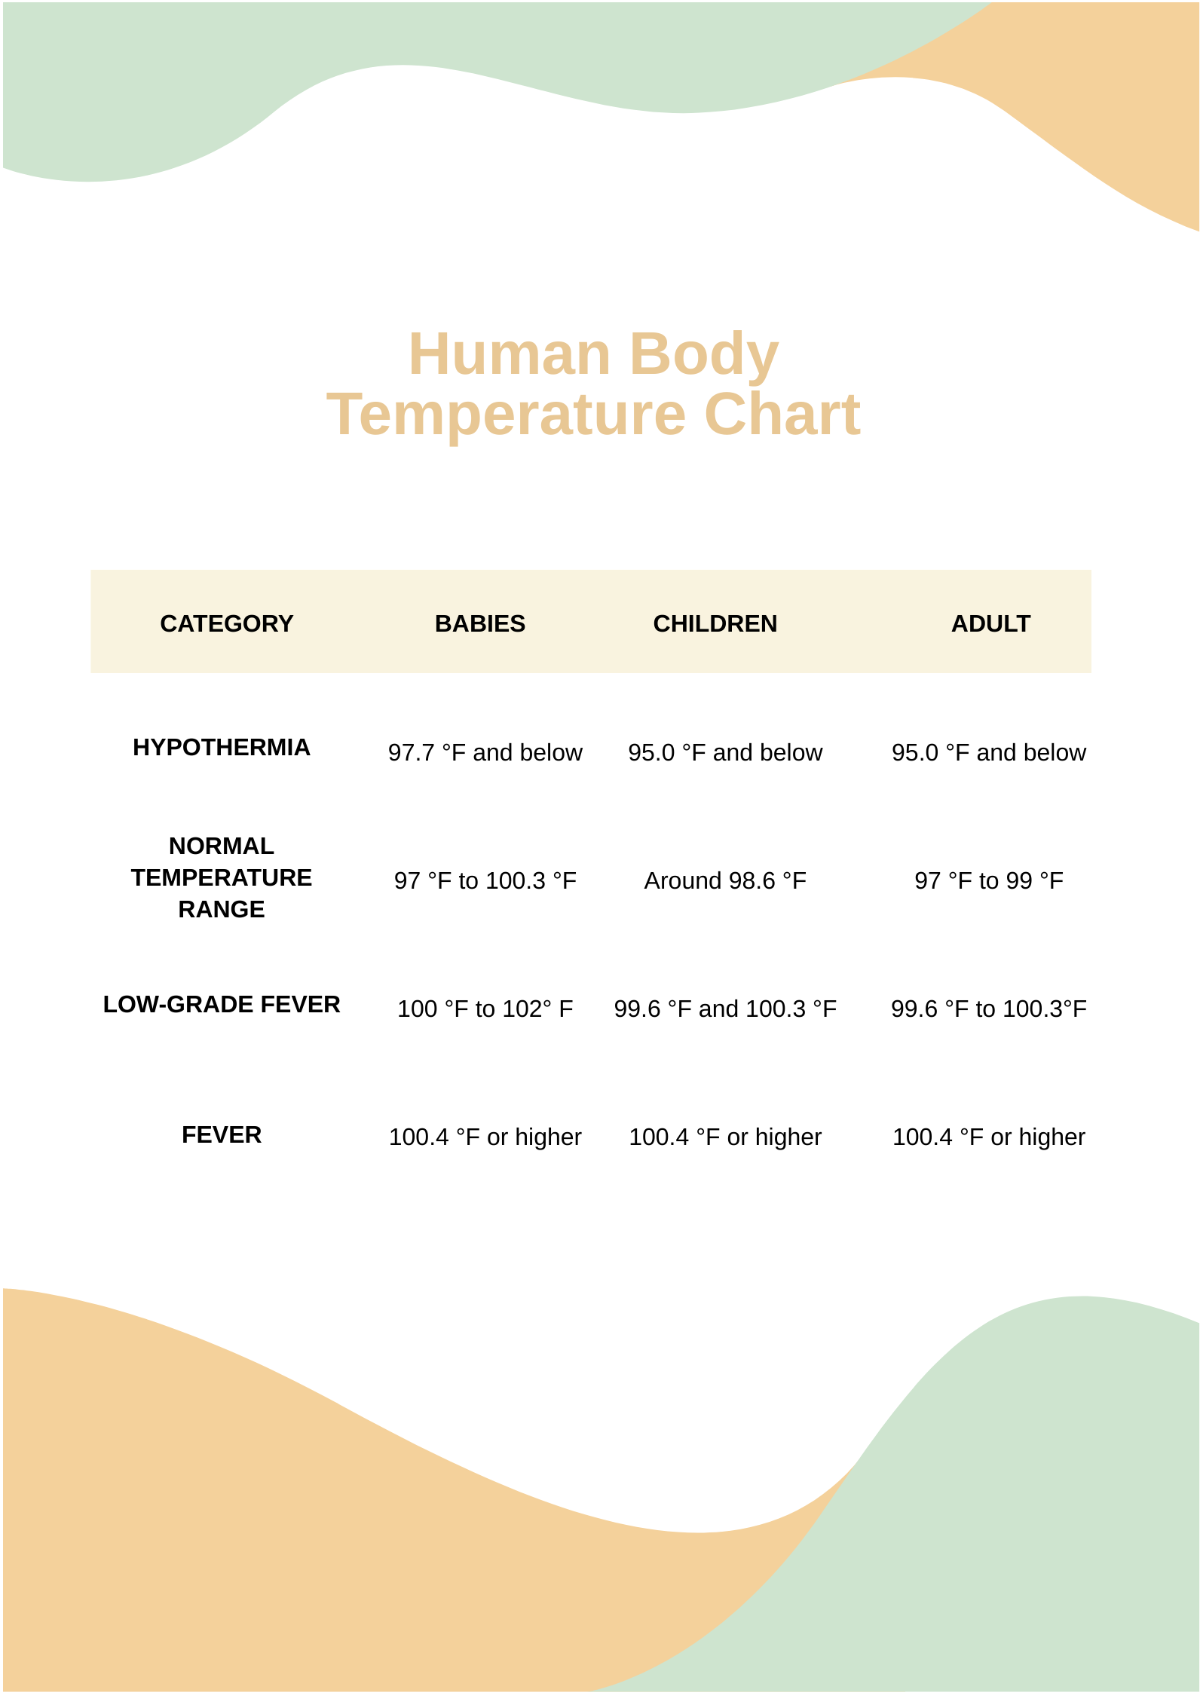 Human Body Temperature 